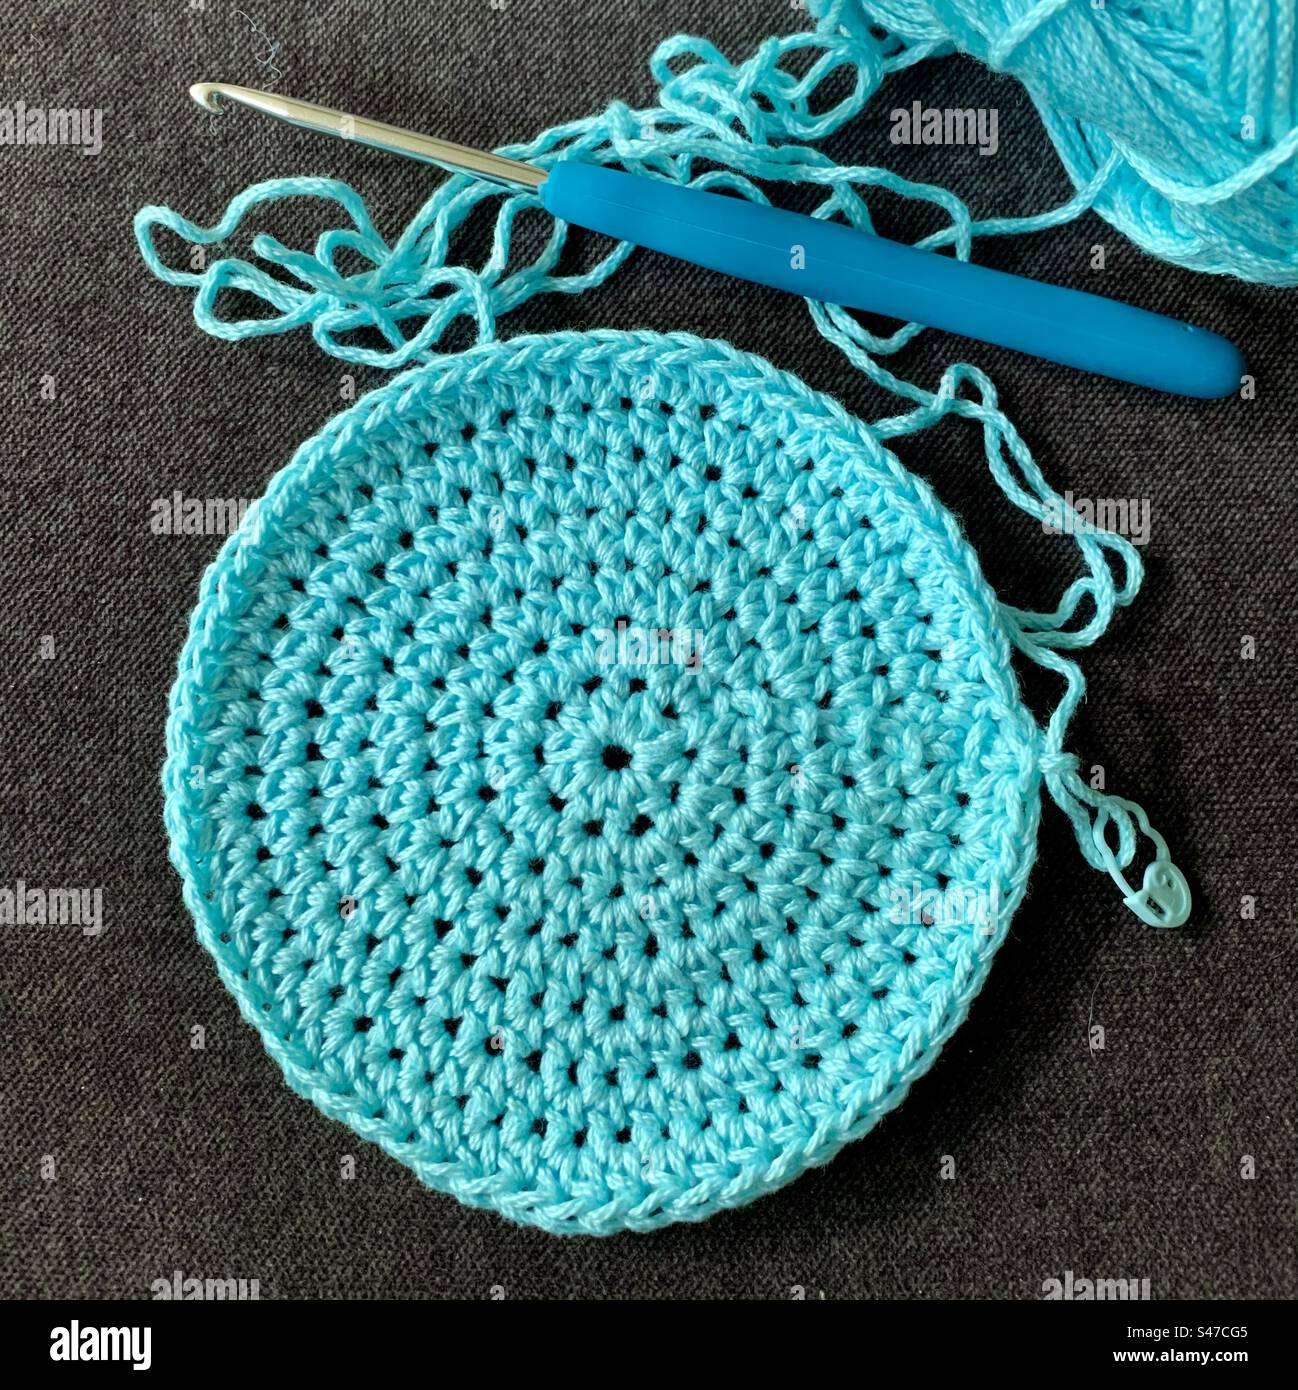 Crocheted circle, yarn and hook. Stock Photo